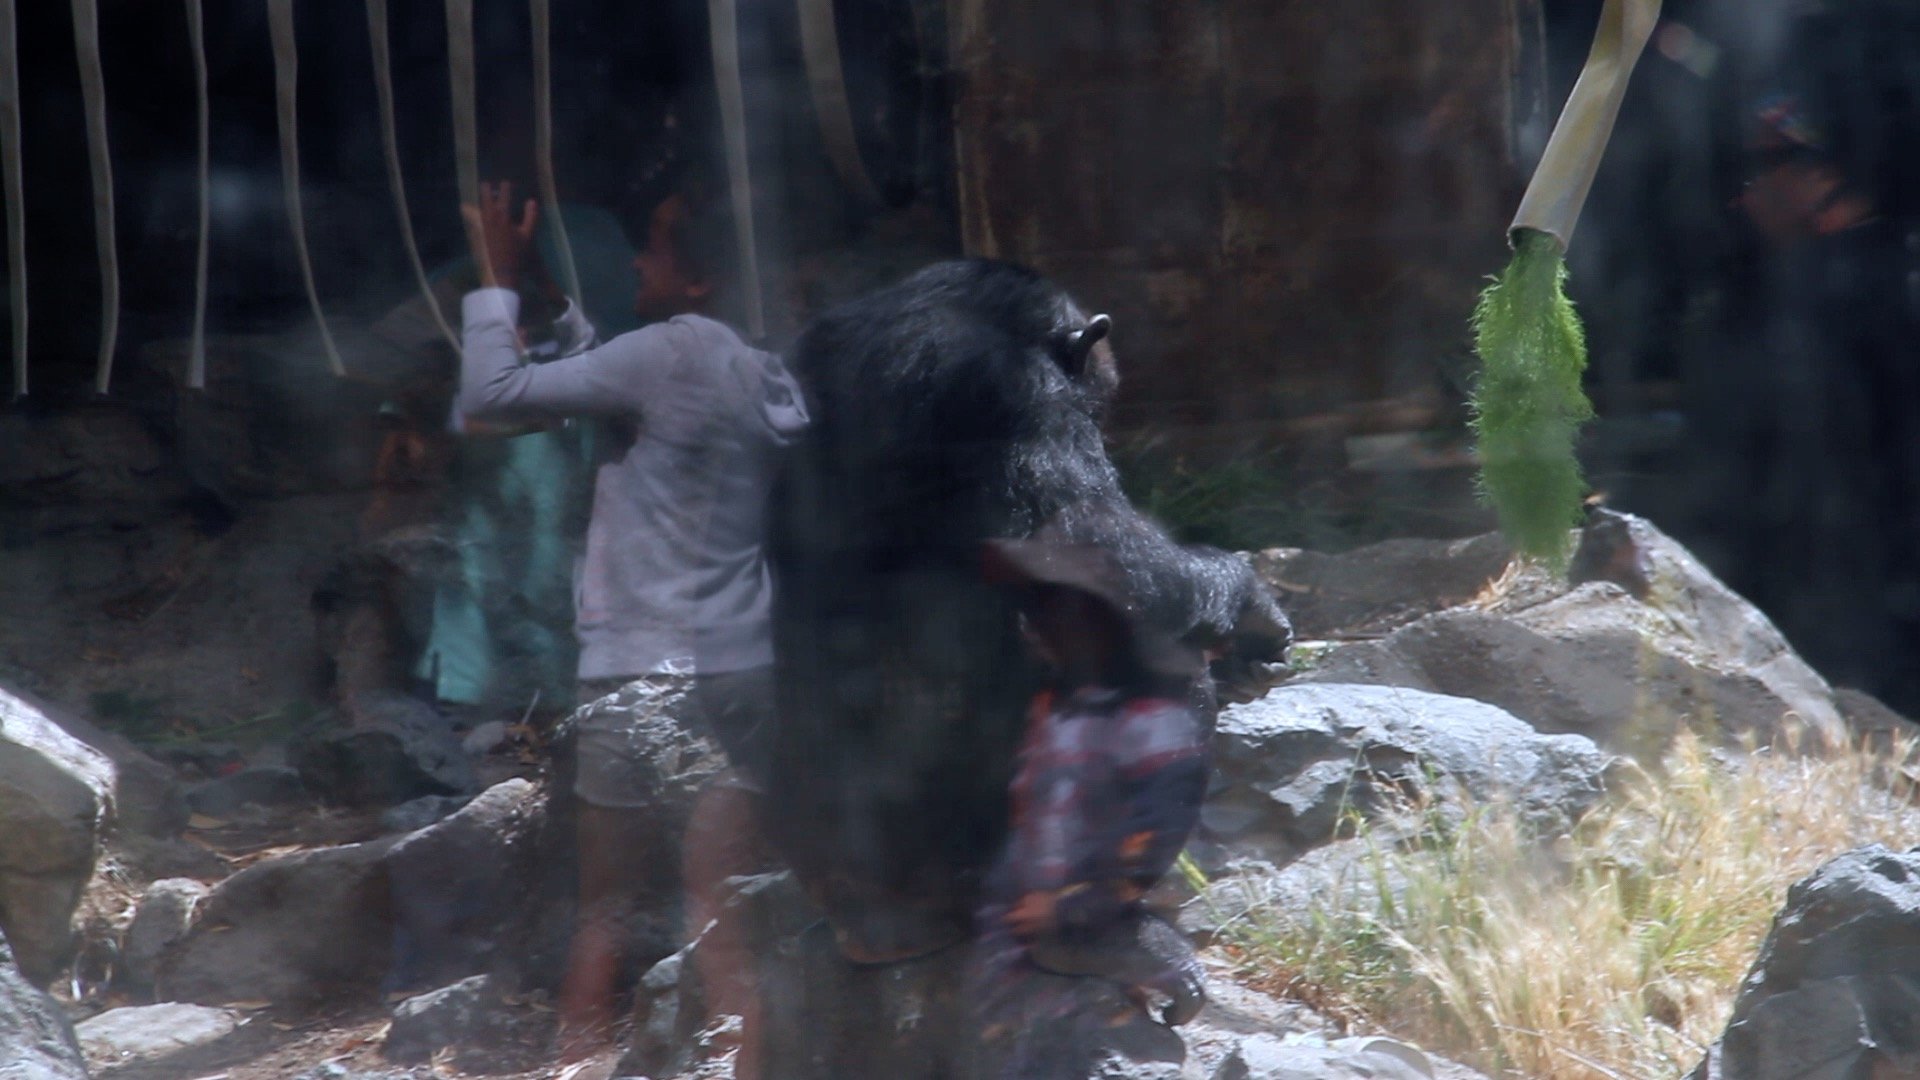 Chimpanzee and Girl Reflection Zoo